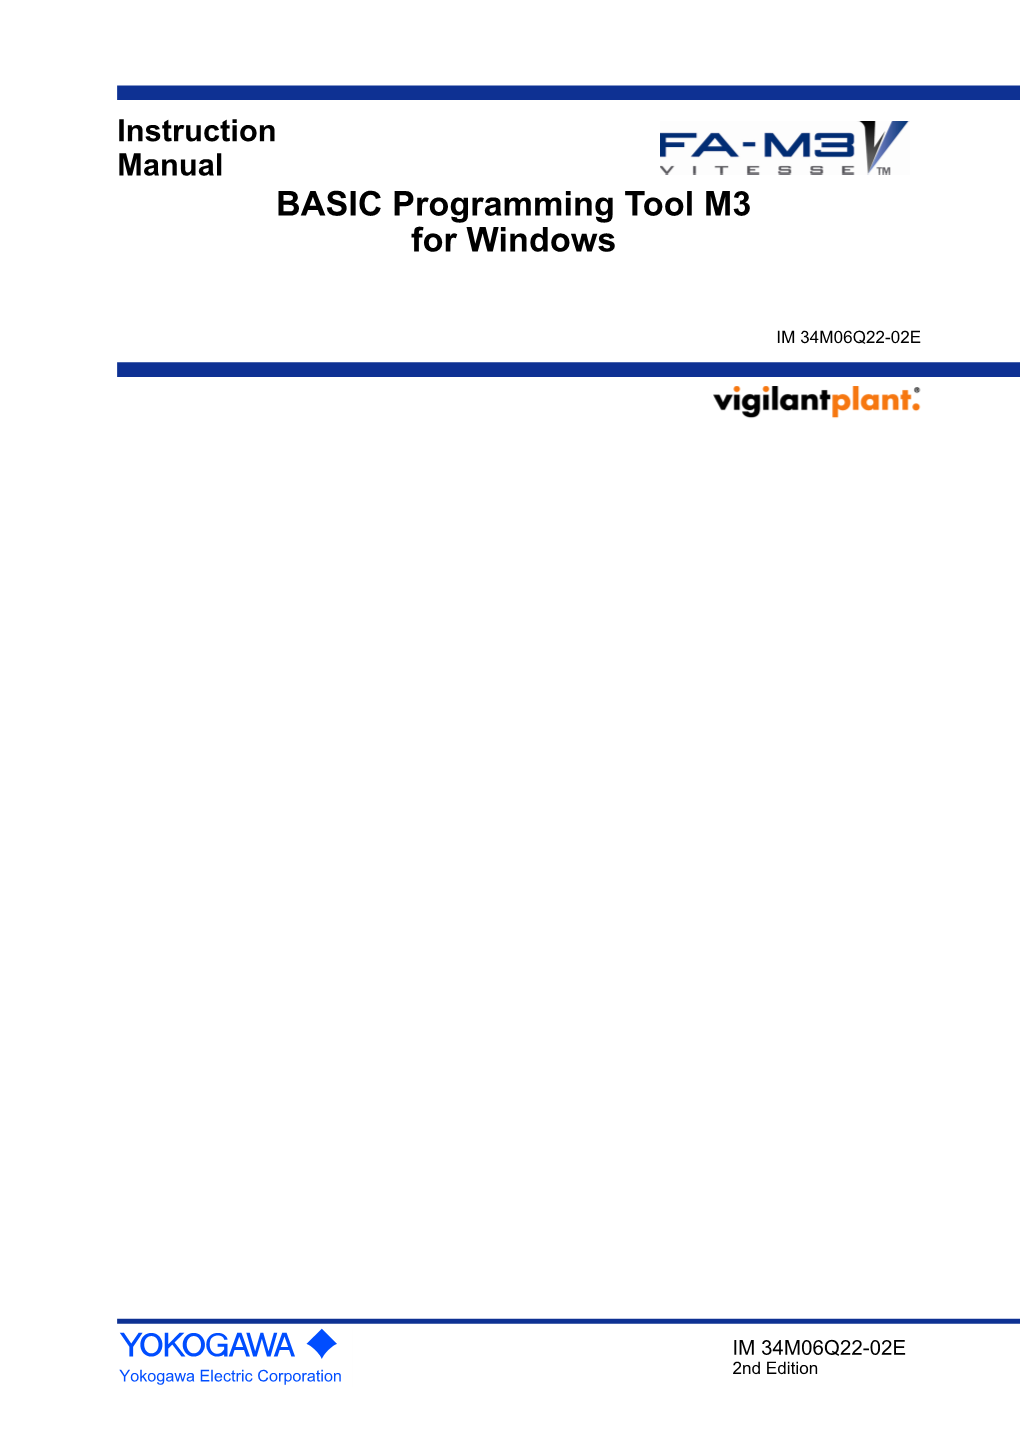 BASIC Programming Tool M3 for Windows